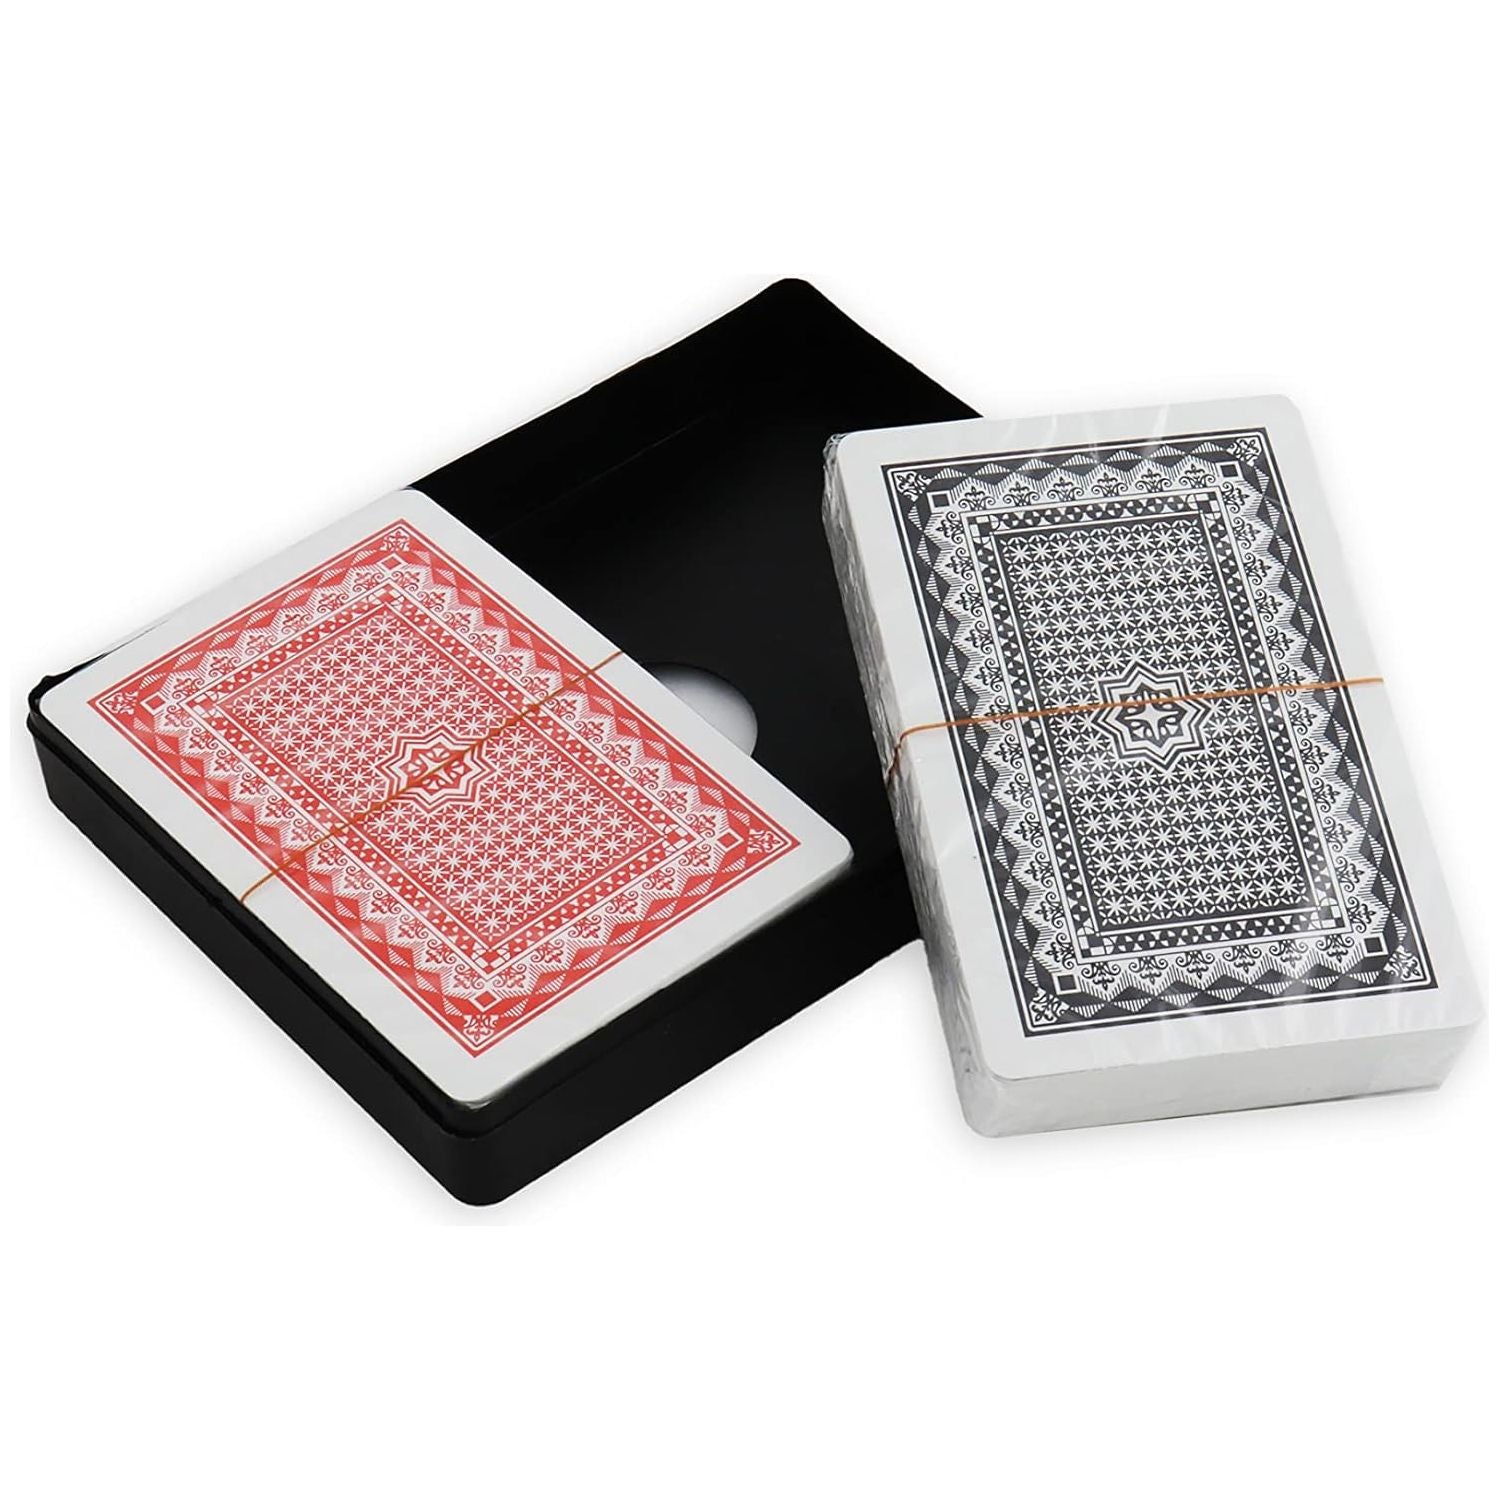 Royality playing cards 2 pcs 100% plastic